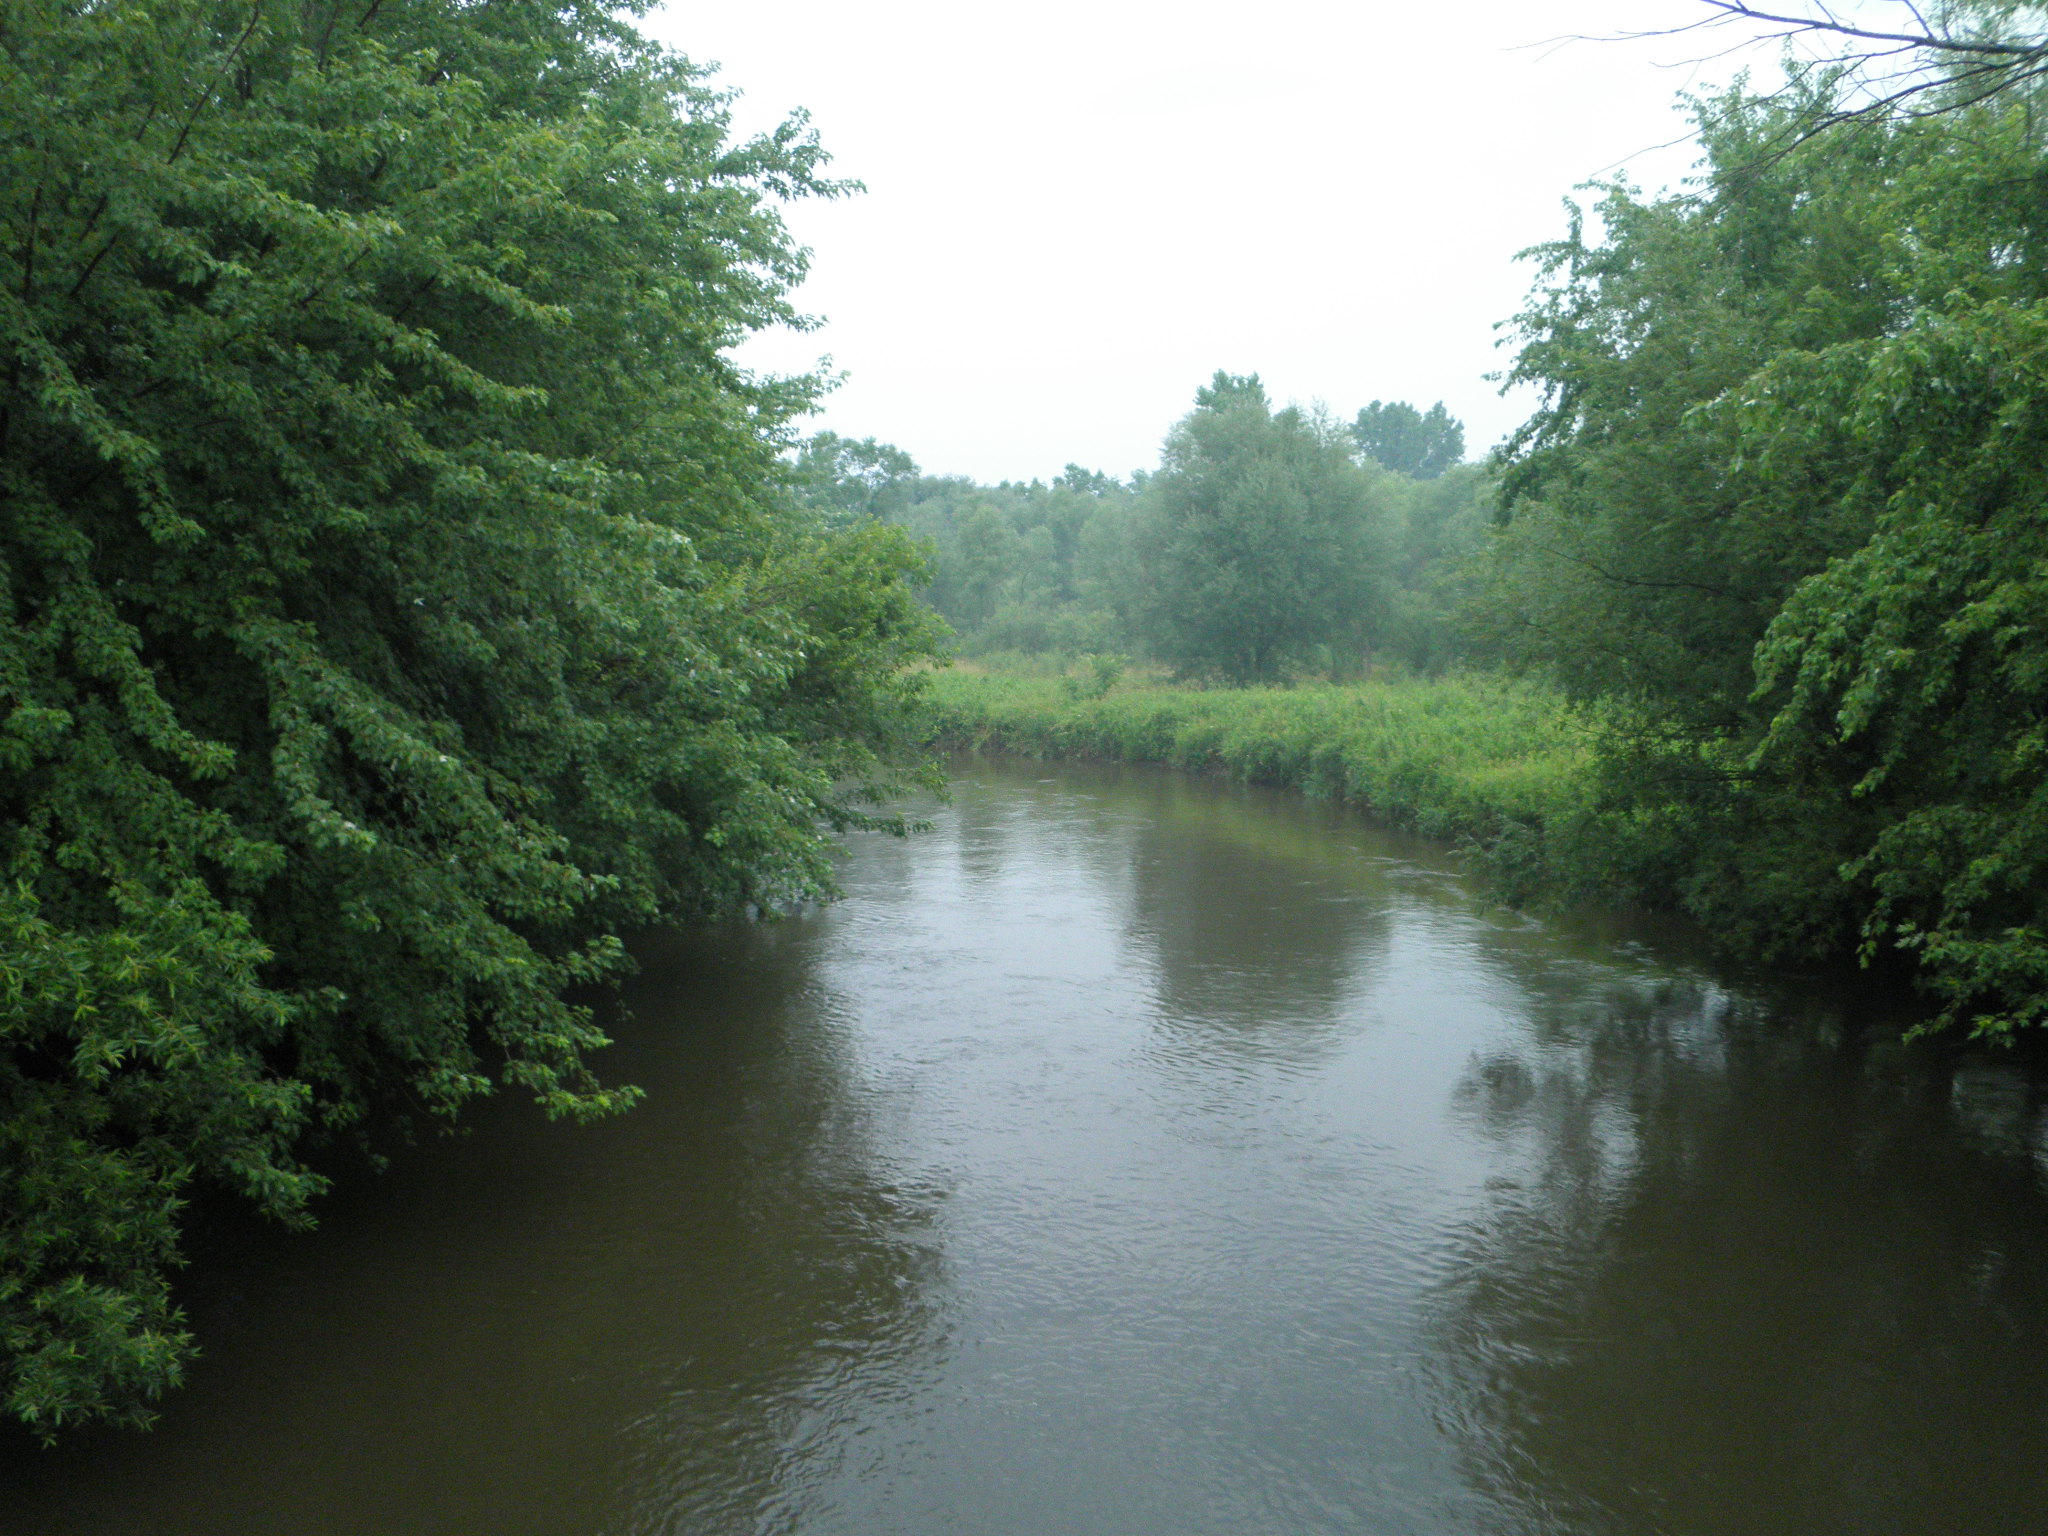 La Crosse River